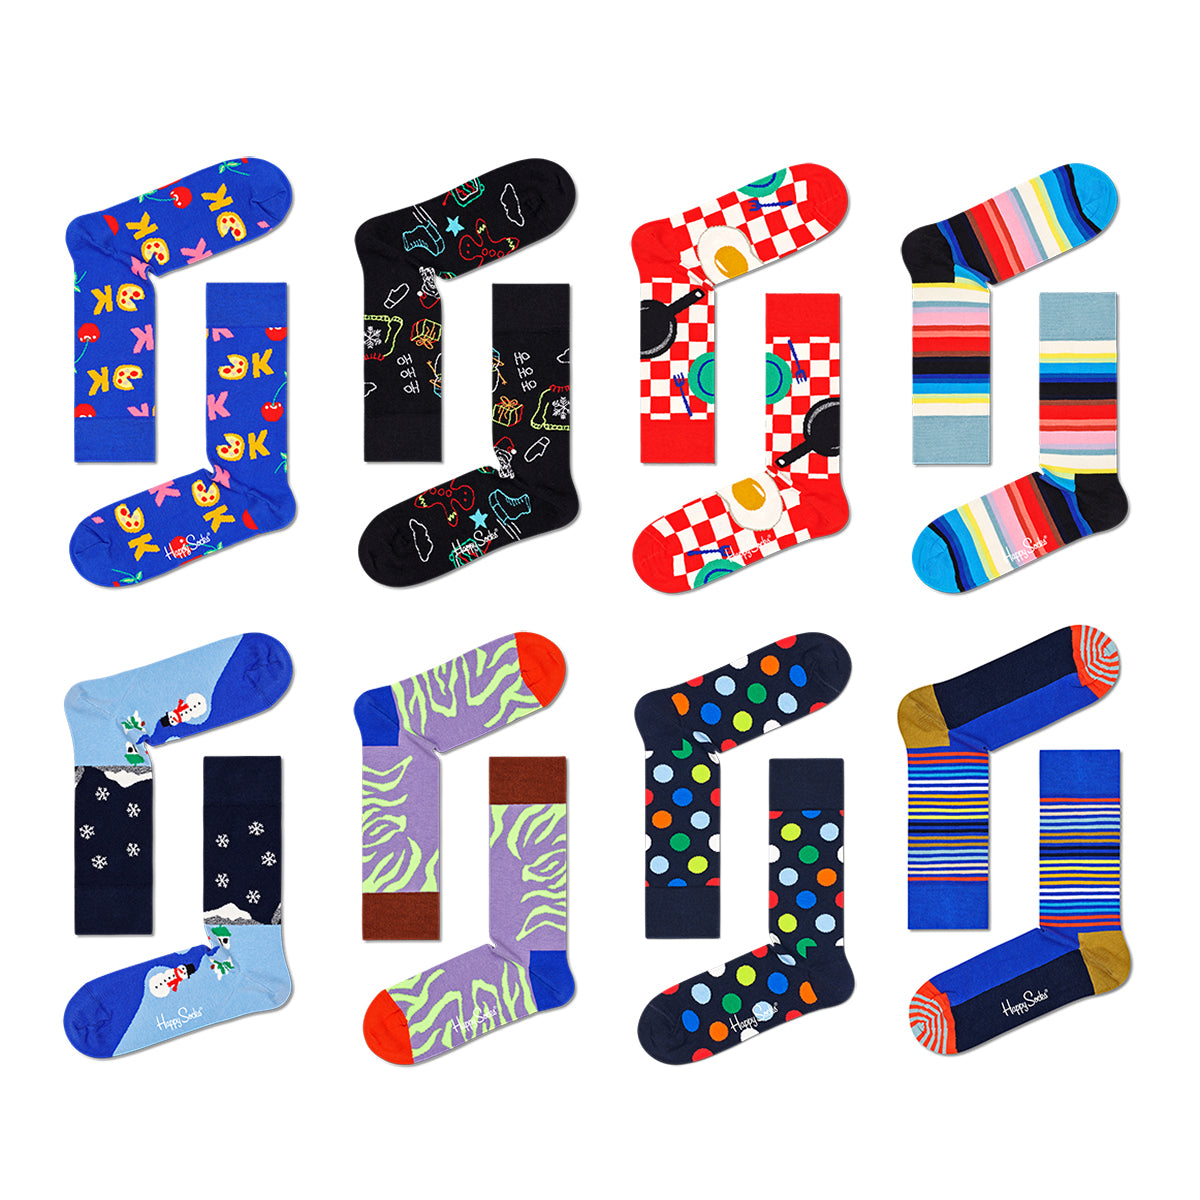 Gift Set 24 Days Of Holiday Socks (0200) 24-Pack